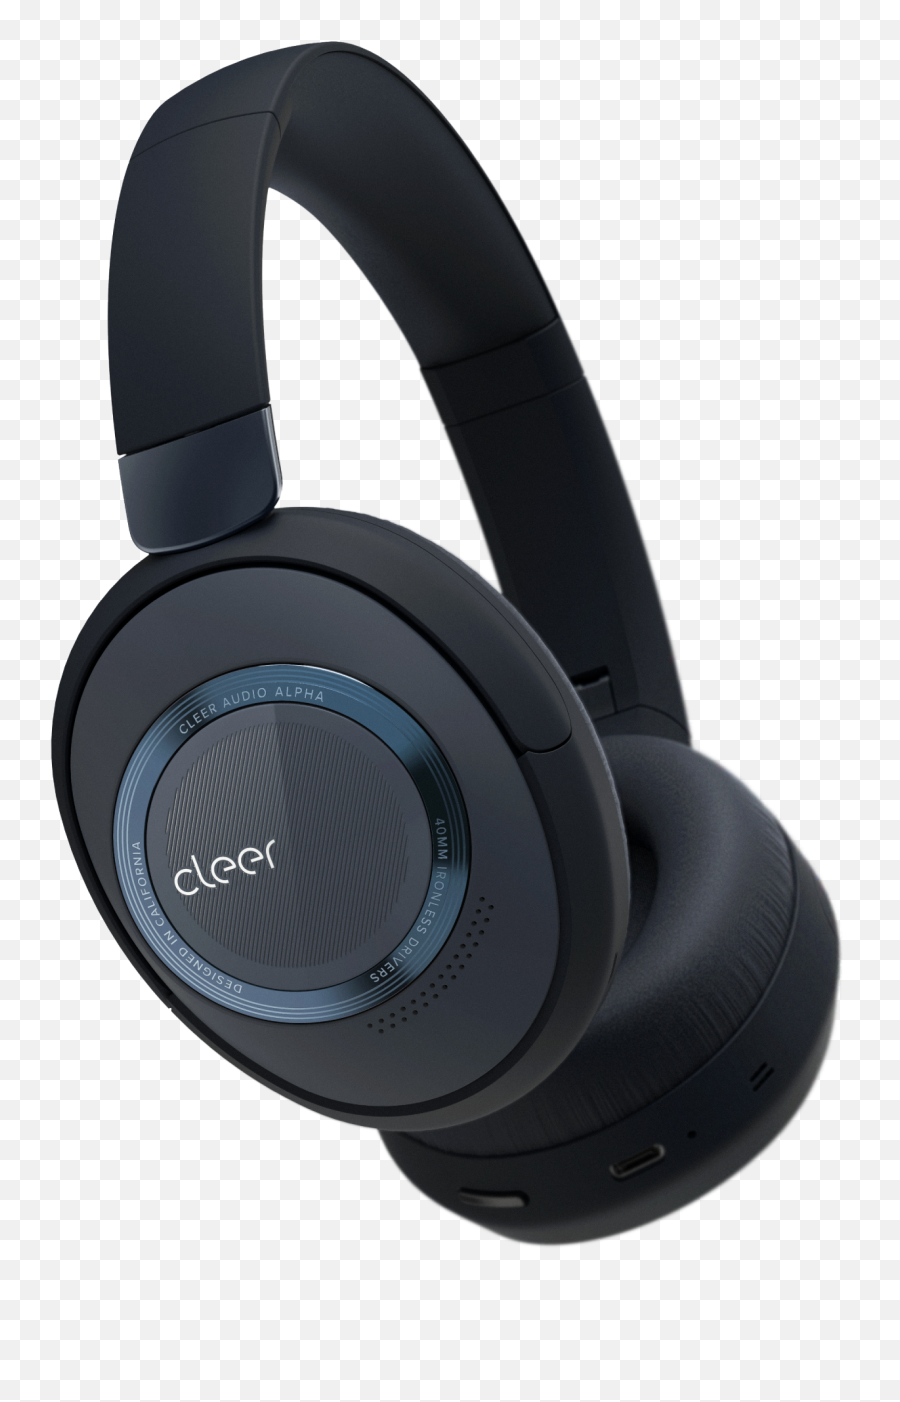 Alpha U2013 Adaptive Active Noise Cancelling Headphones Cleer - Headphones Png,Jawbone Icon Gold Bluetooth Headset